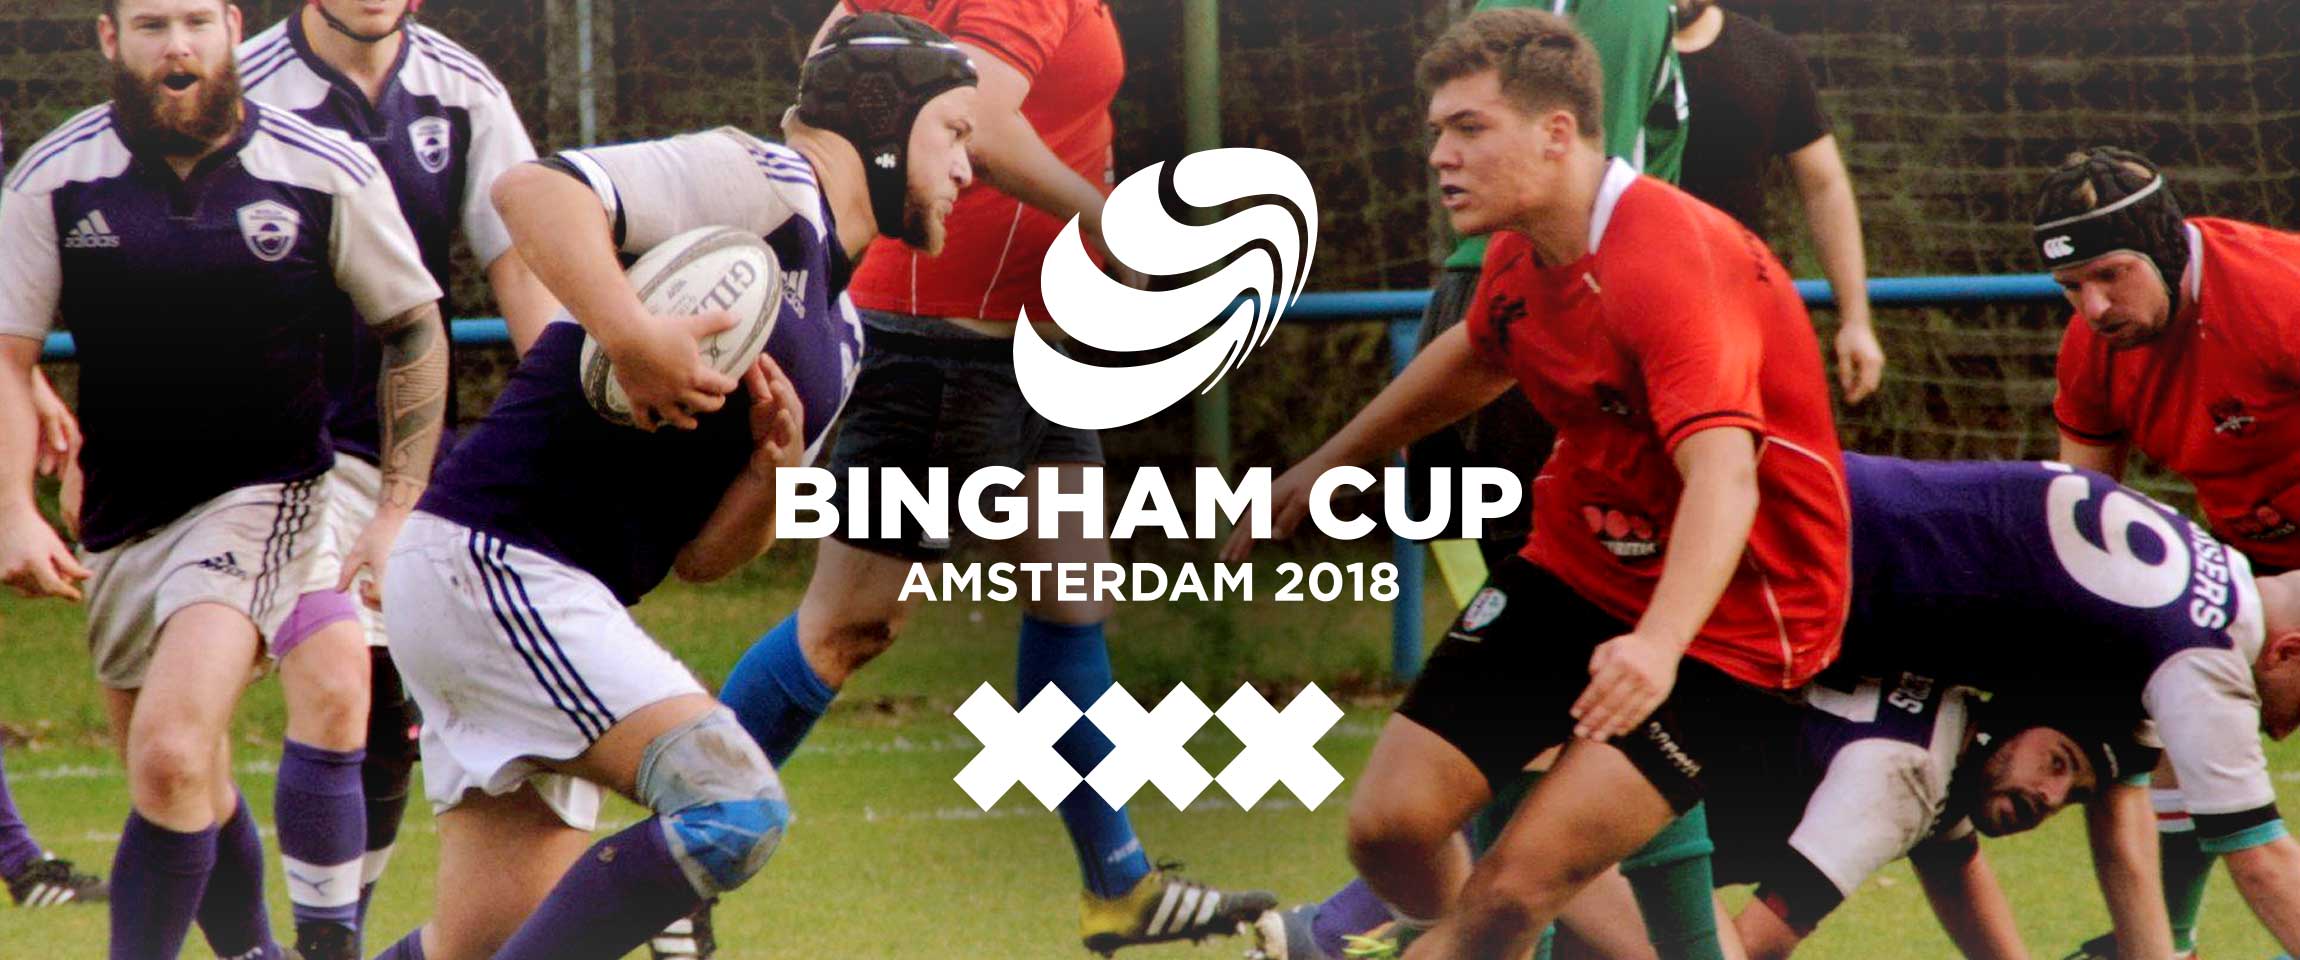 The Bingham Cup